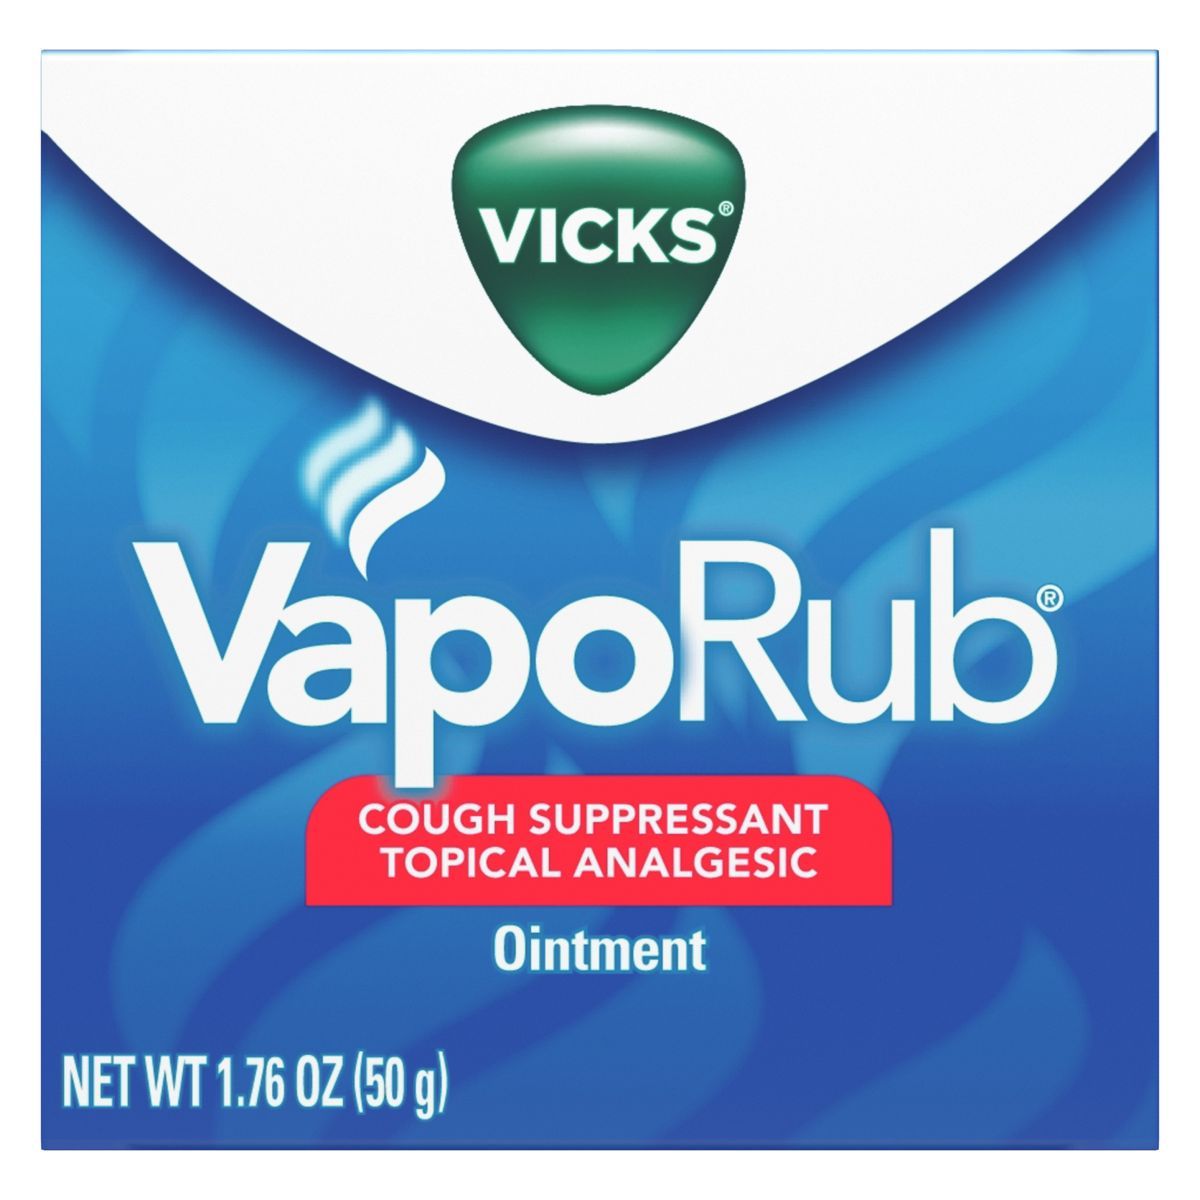 Vicks VapoRub Cough Suppressant Ointment | Target